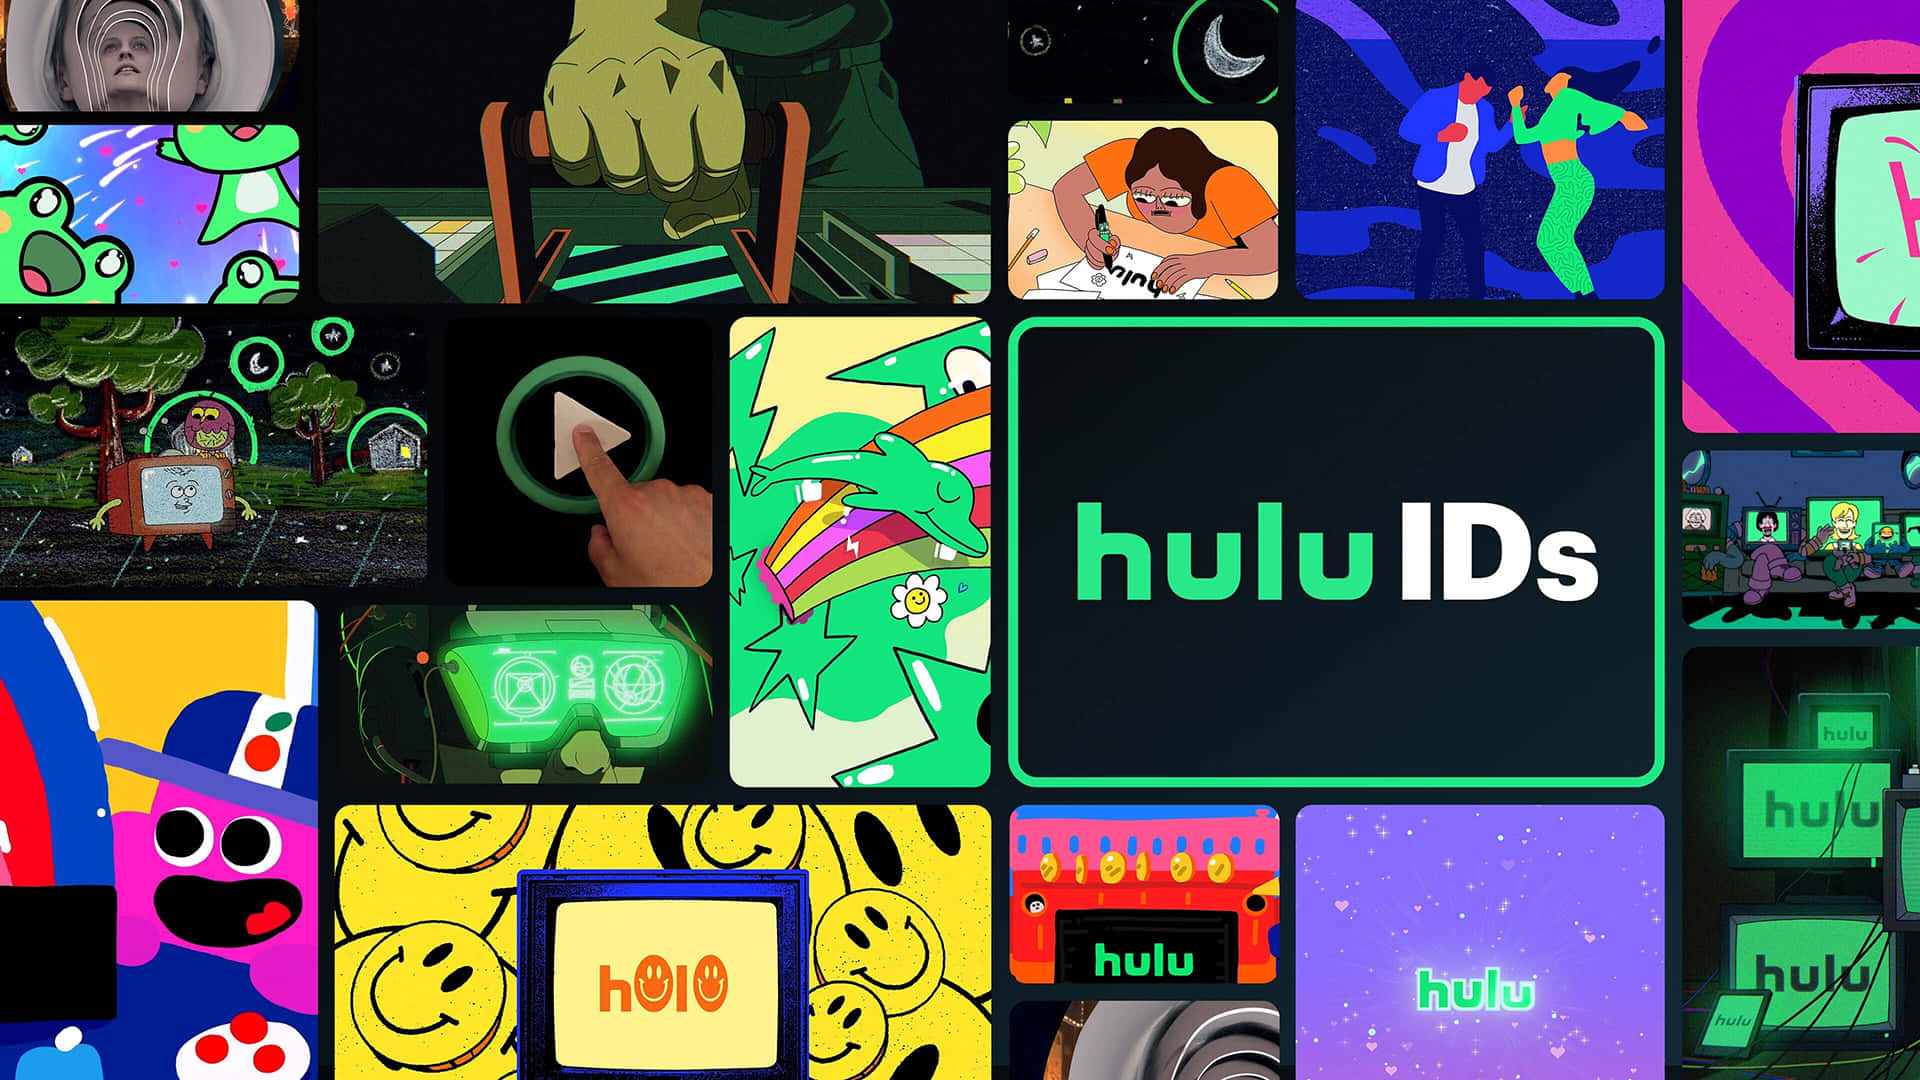 Enjoy full seasons of your favorite TV shows on Hulu